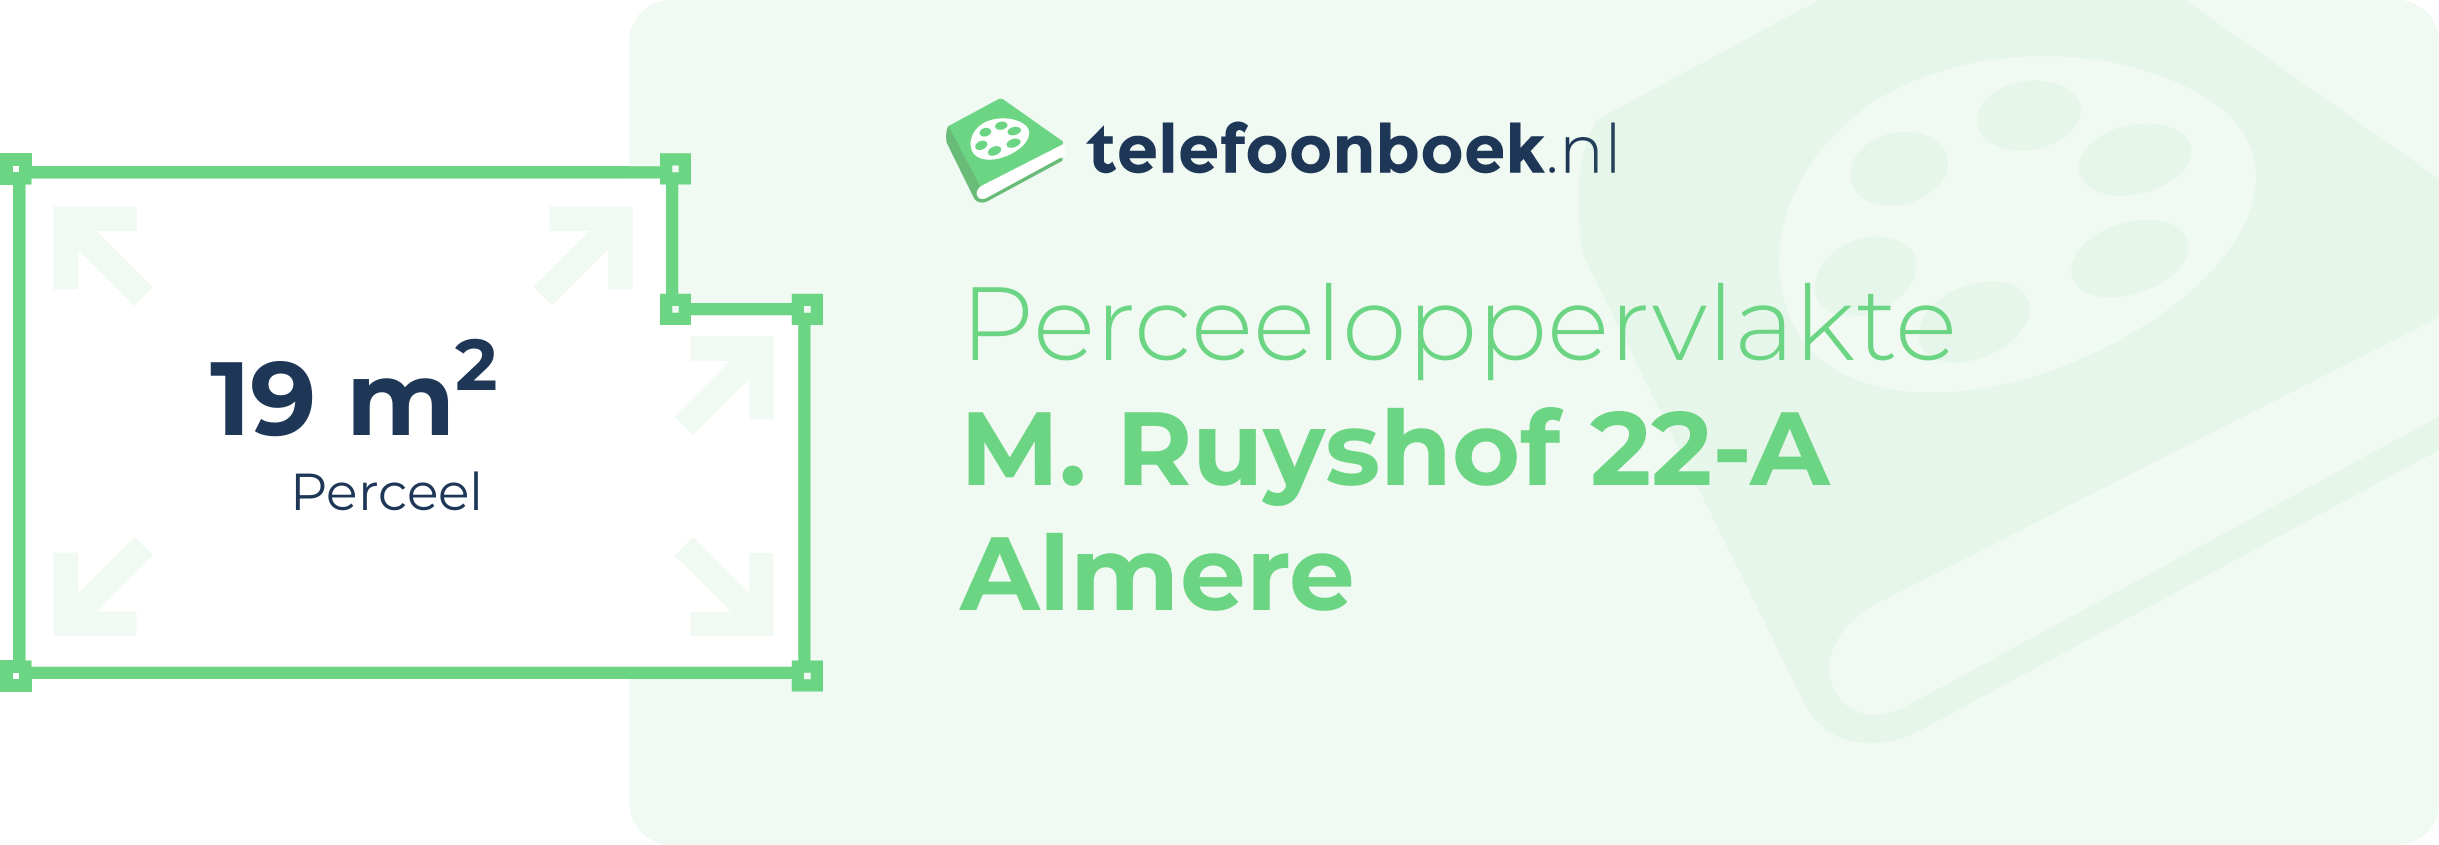 Perceeloppervlakte M. Ruyshof 22-A Almere